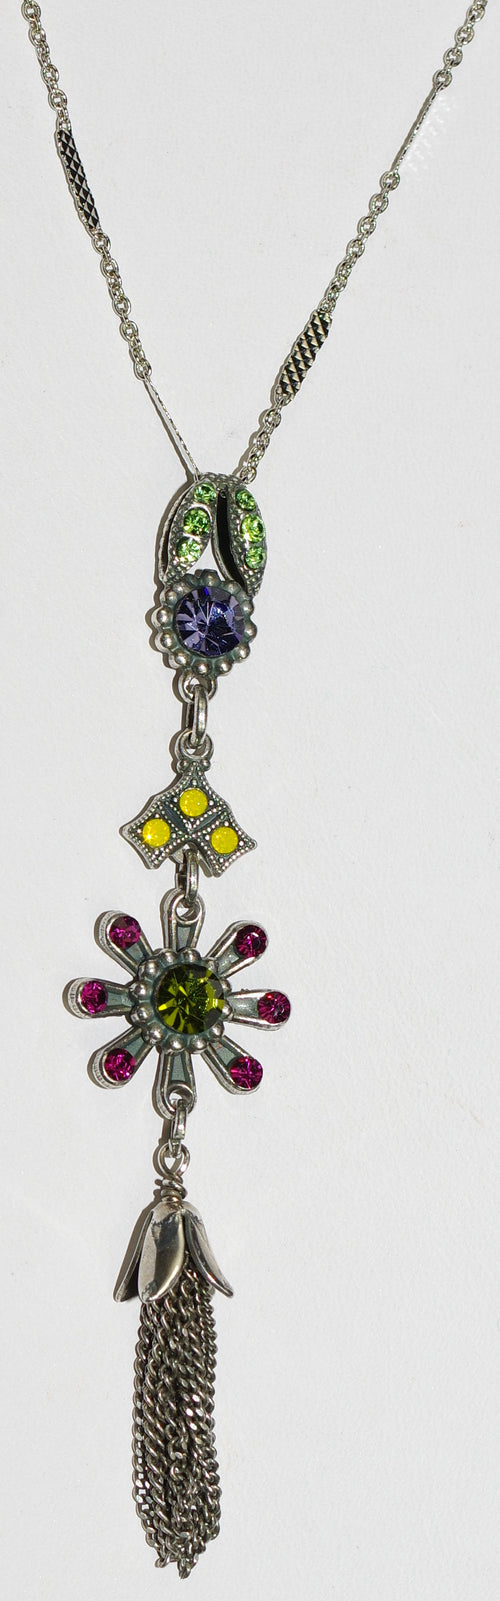 MARIANA PENDANT CUBA: pink, purple, green, yellow stones in 3" silver setting, 30" adjustable chain